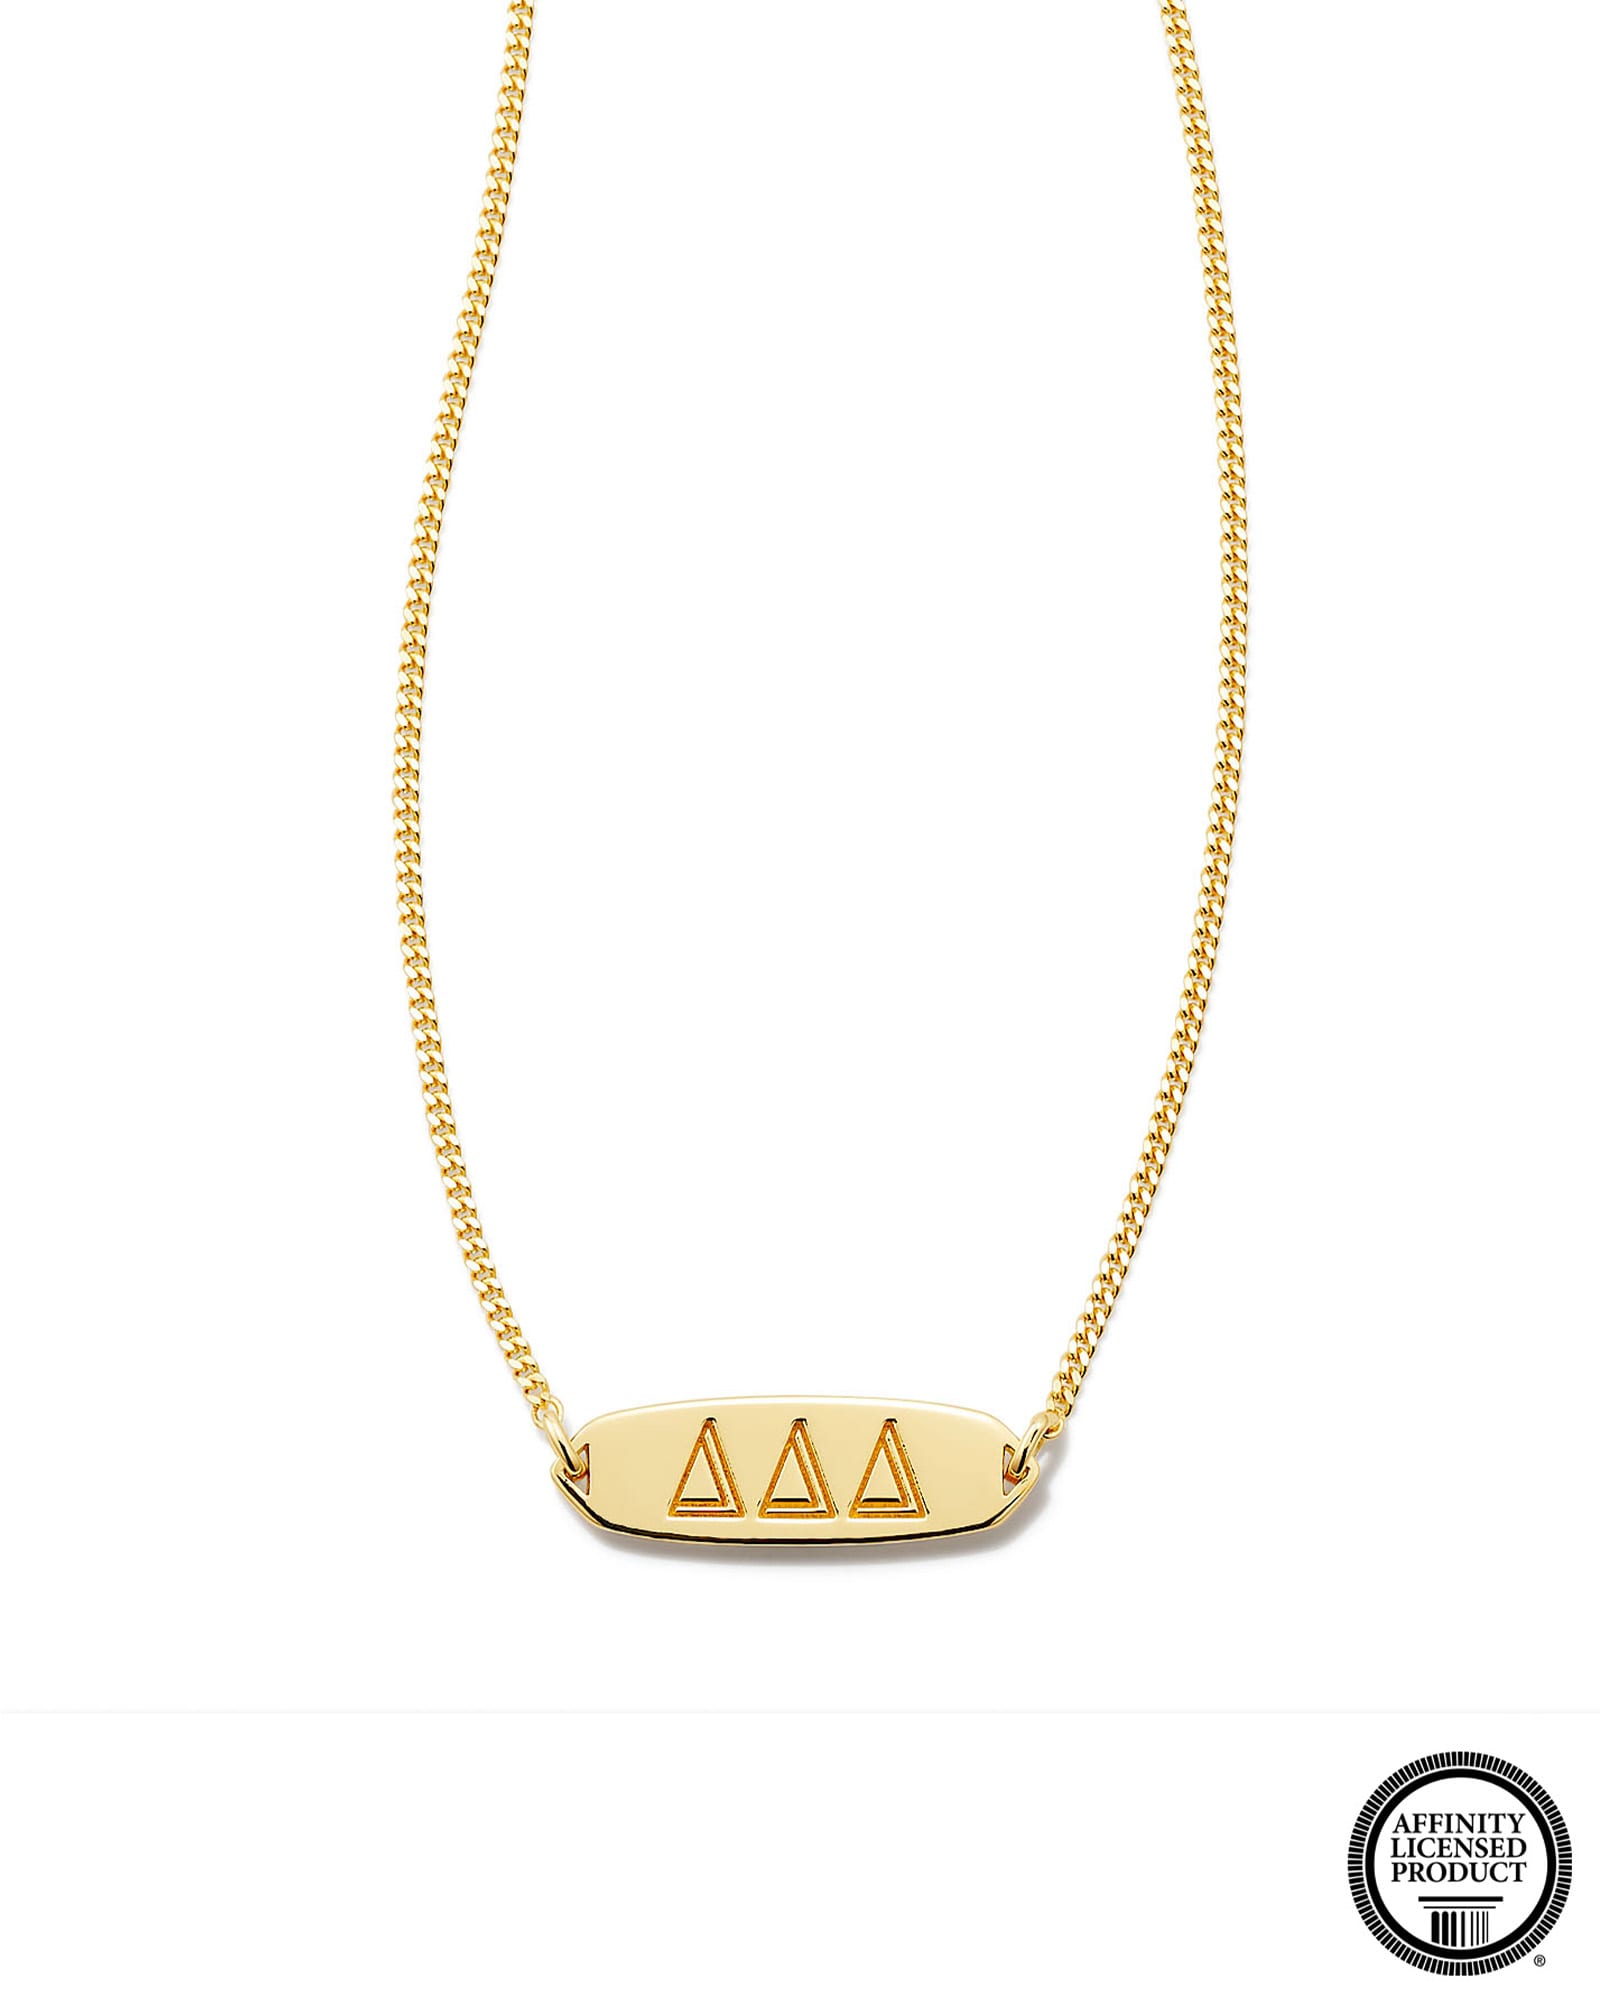 Delta Delta Delta Pendant Necklace in 18k Gold Vermeil